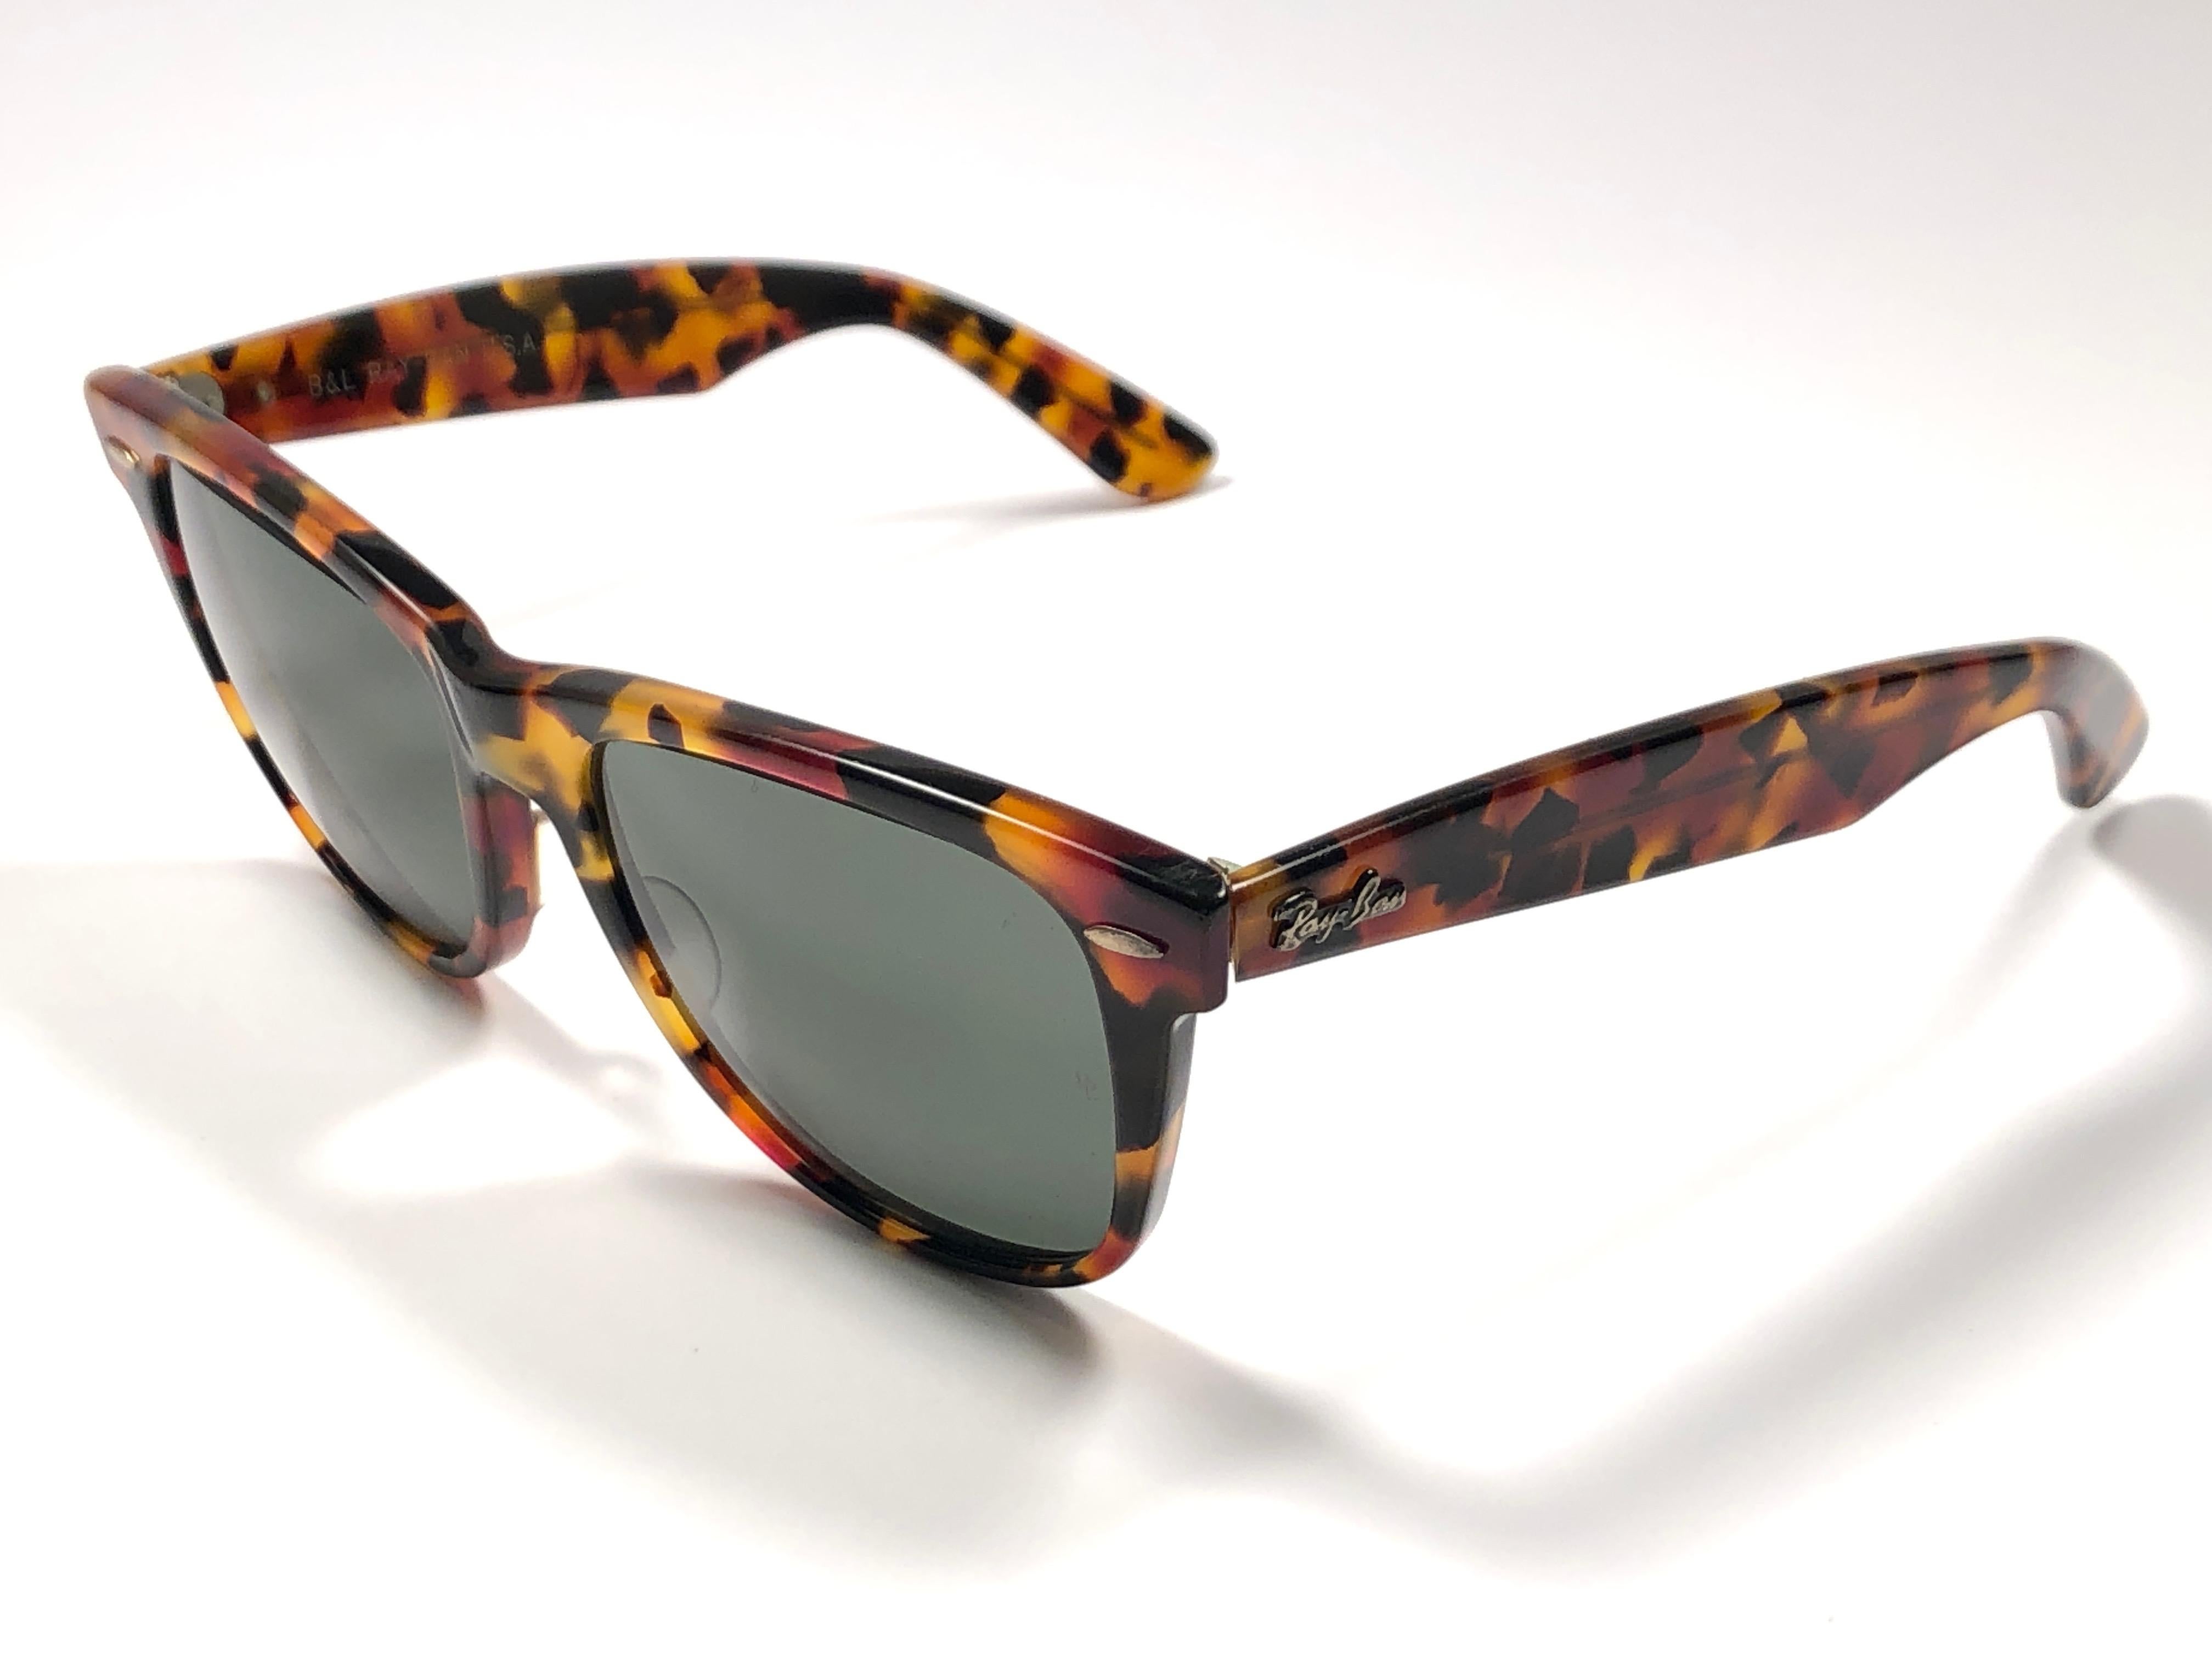 New Ray Ban The Wayfarer II Tortoise G15 Grey Lenses USA 80's Sunglasses 1